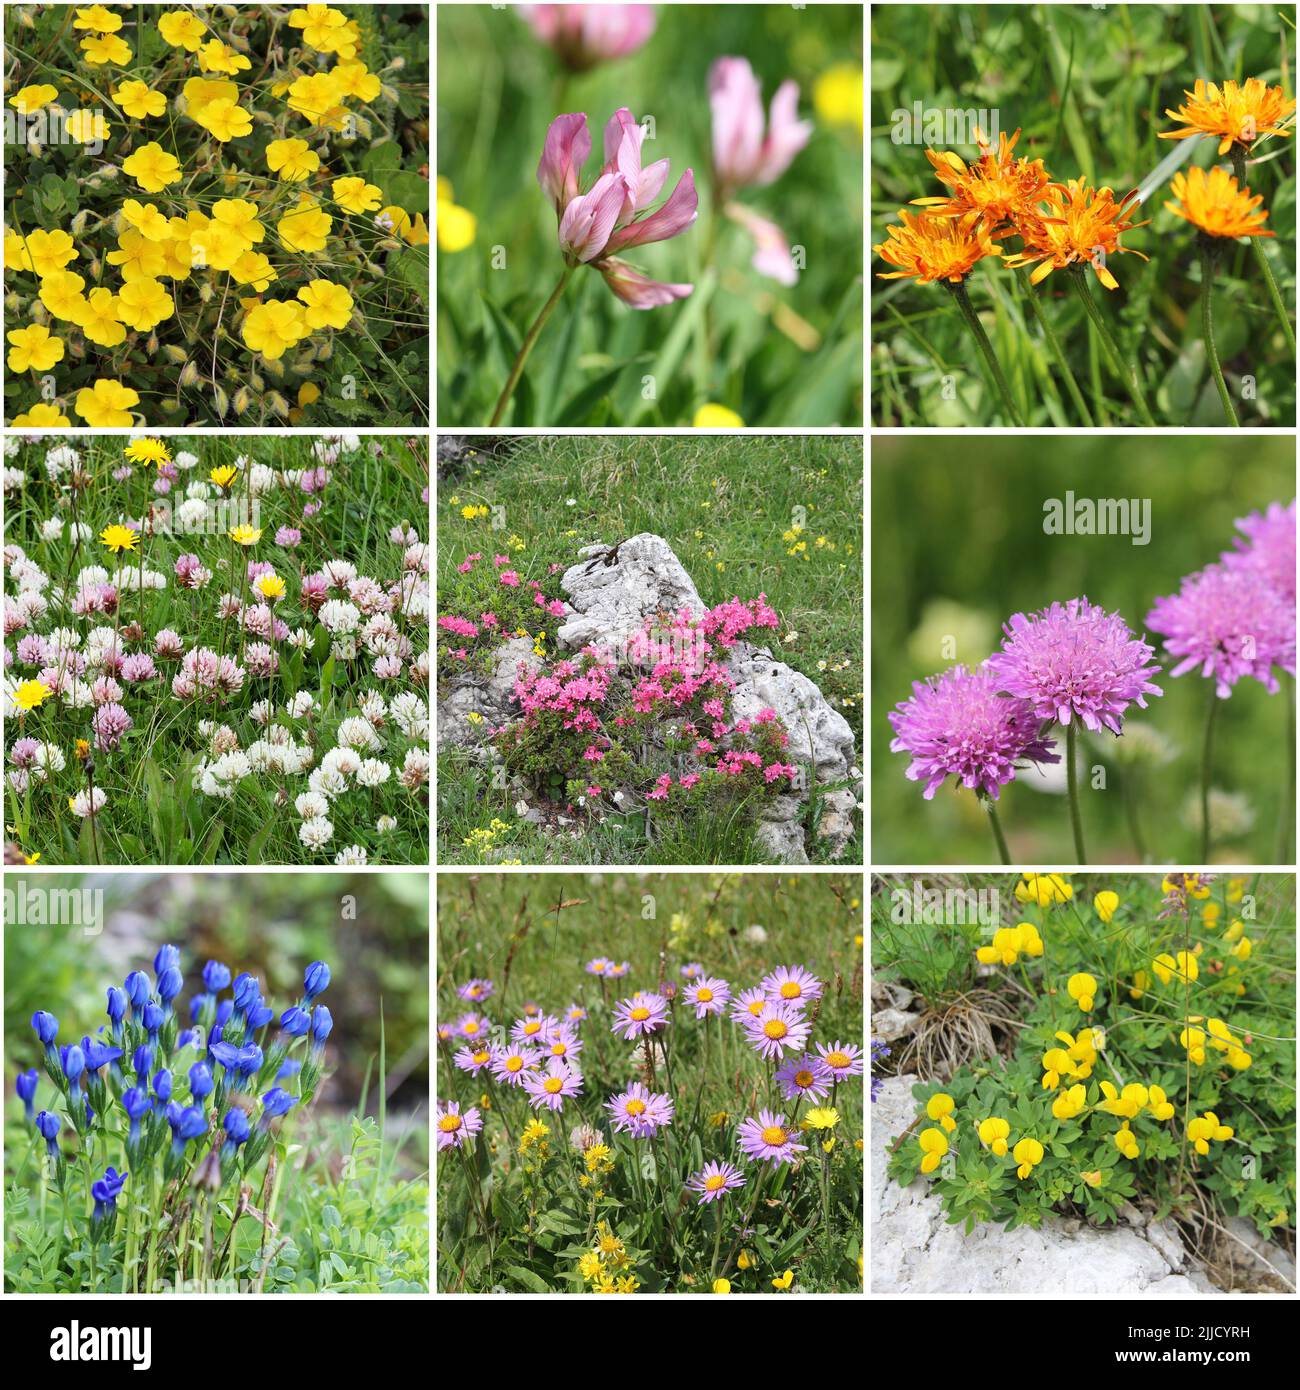 Alps Flora collage, Series 3: from top left: rock rose, alpine clover, golden Hawk's-beard, red clover, Alps rose, scabiosa columbaria, Gentiana verna Stock Photo